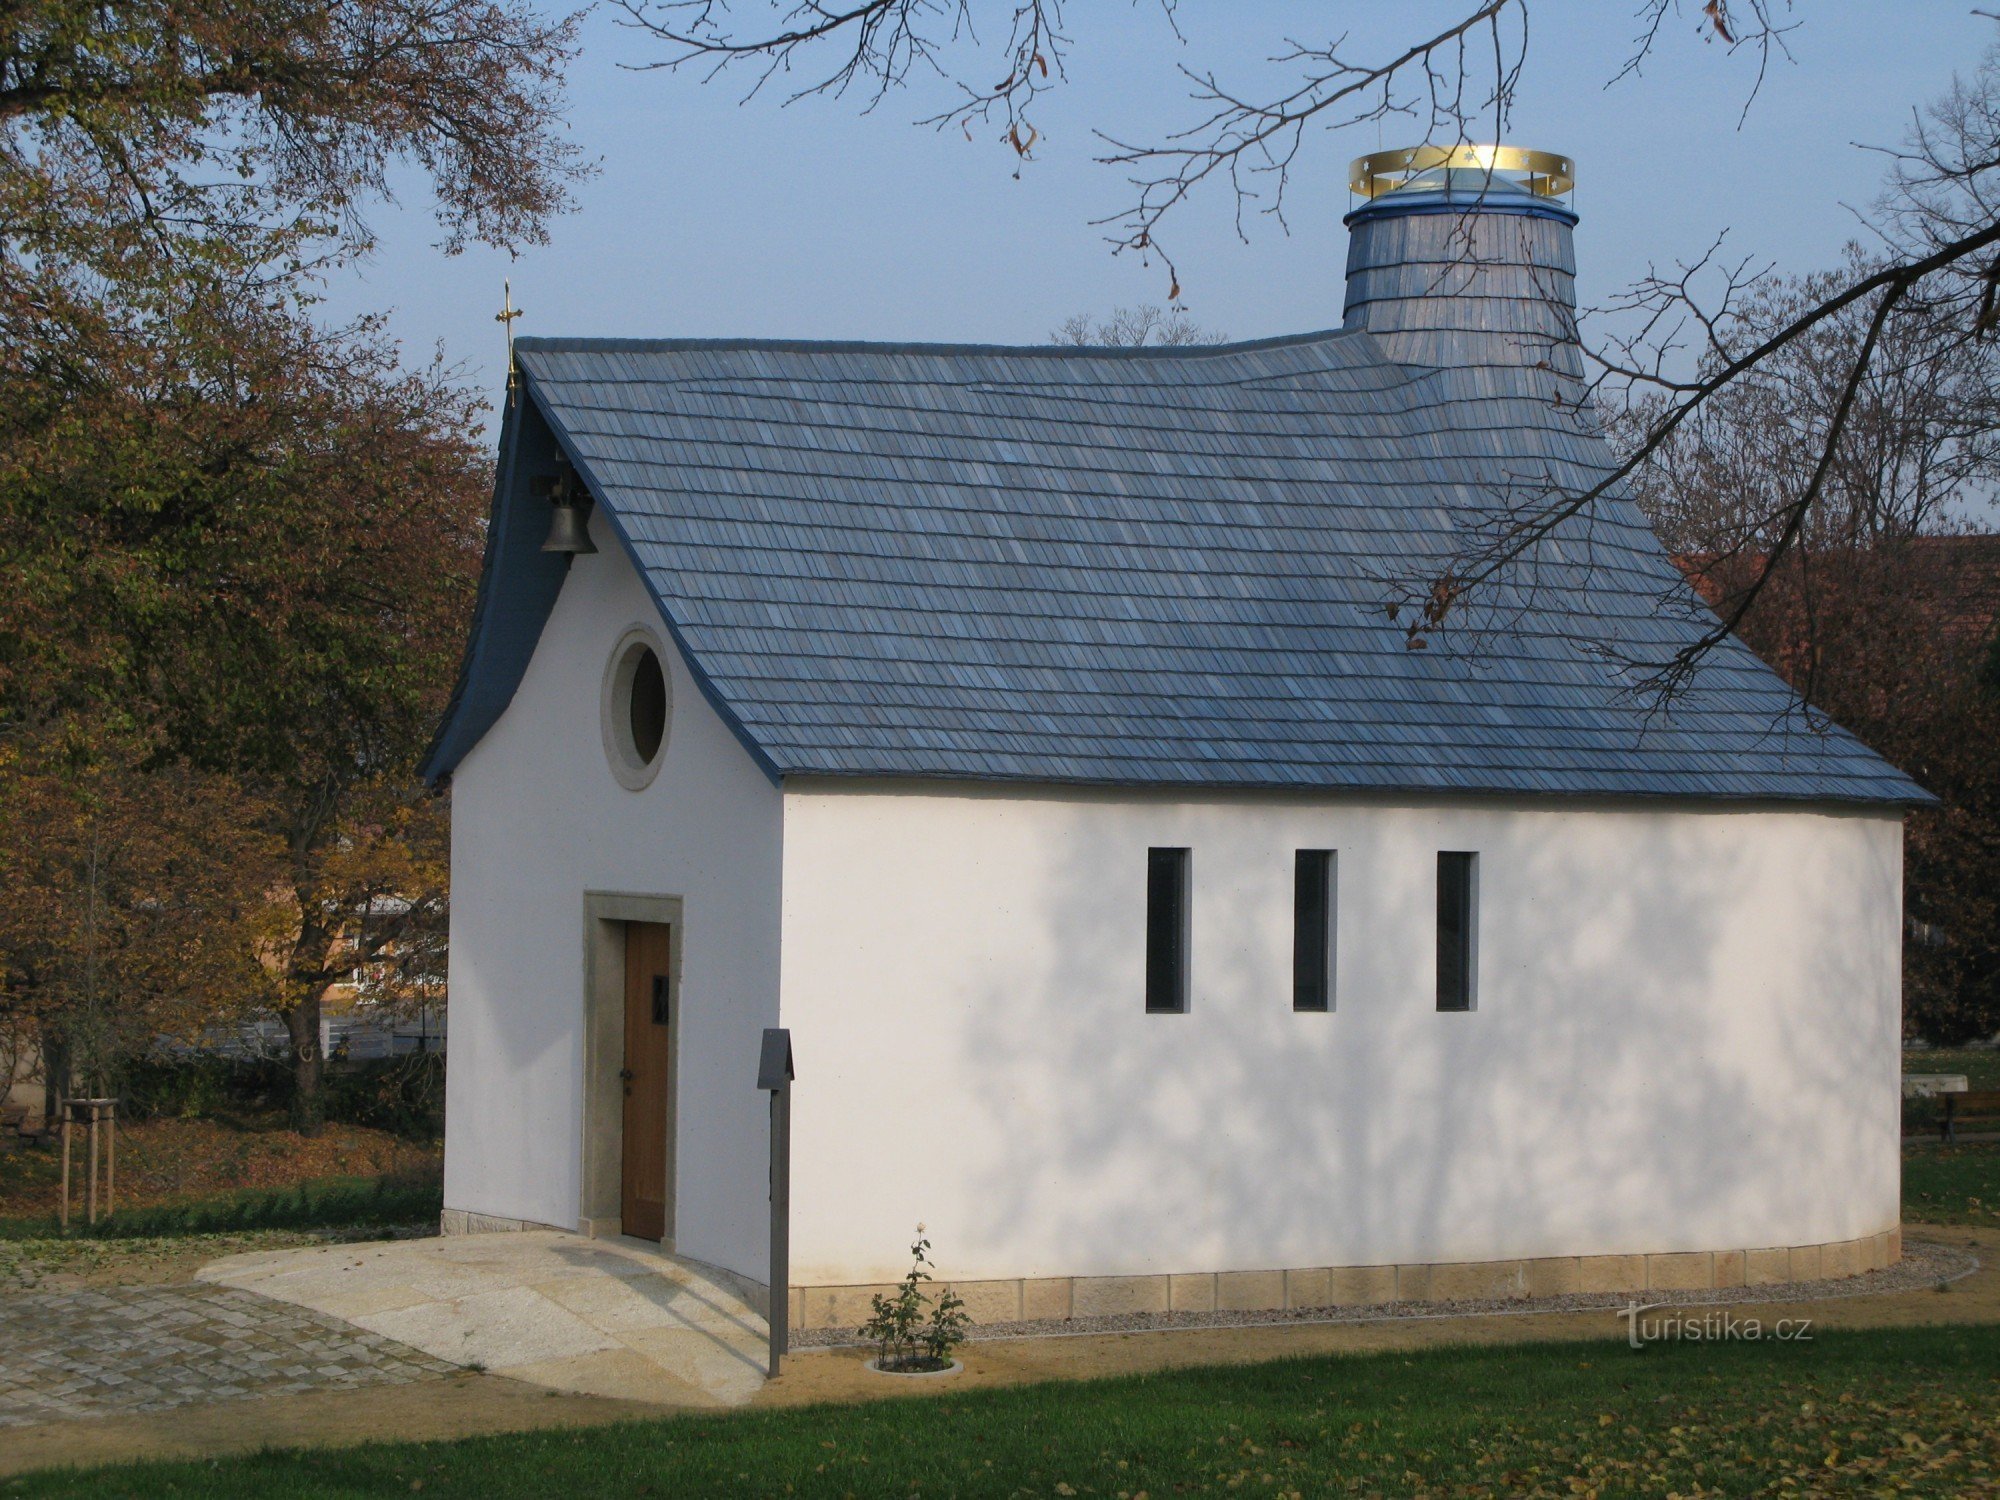 Kamenné Žehrovice, chapelle